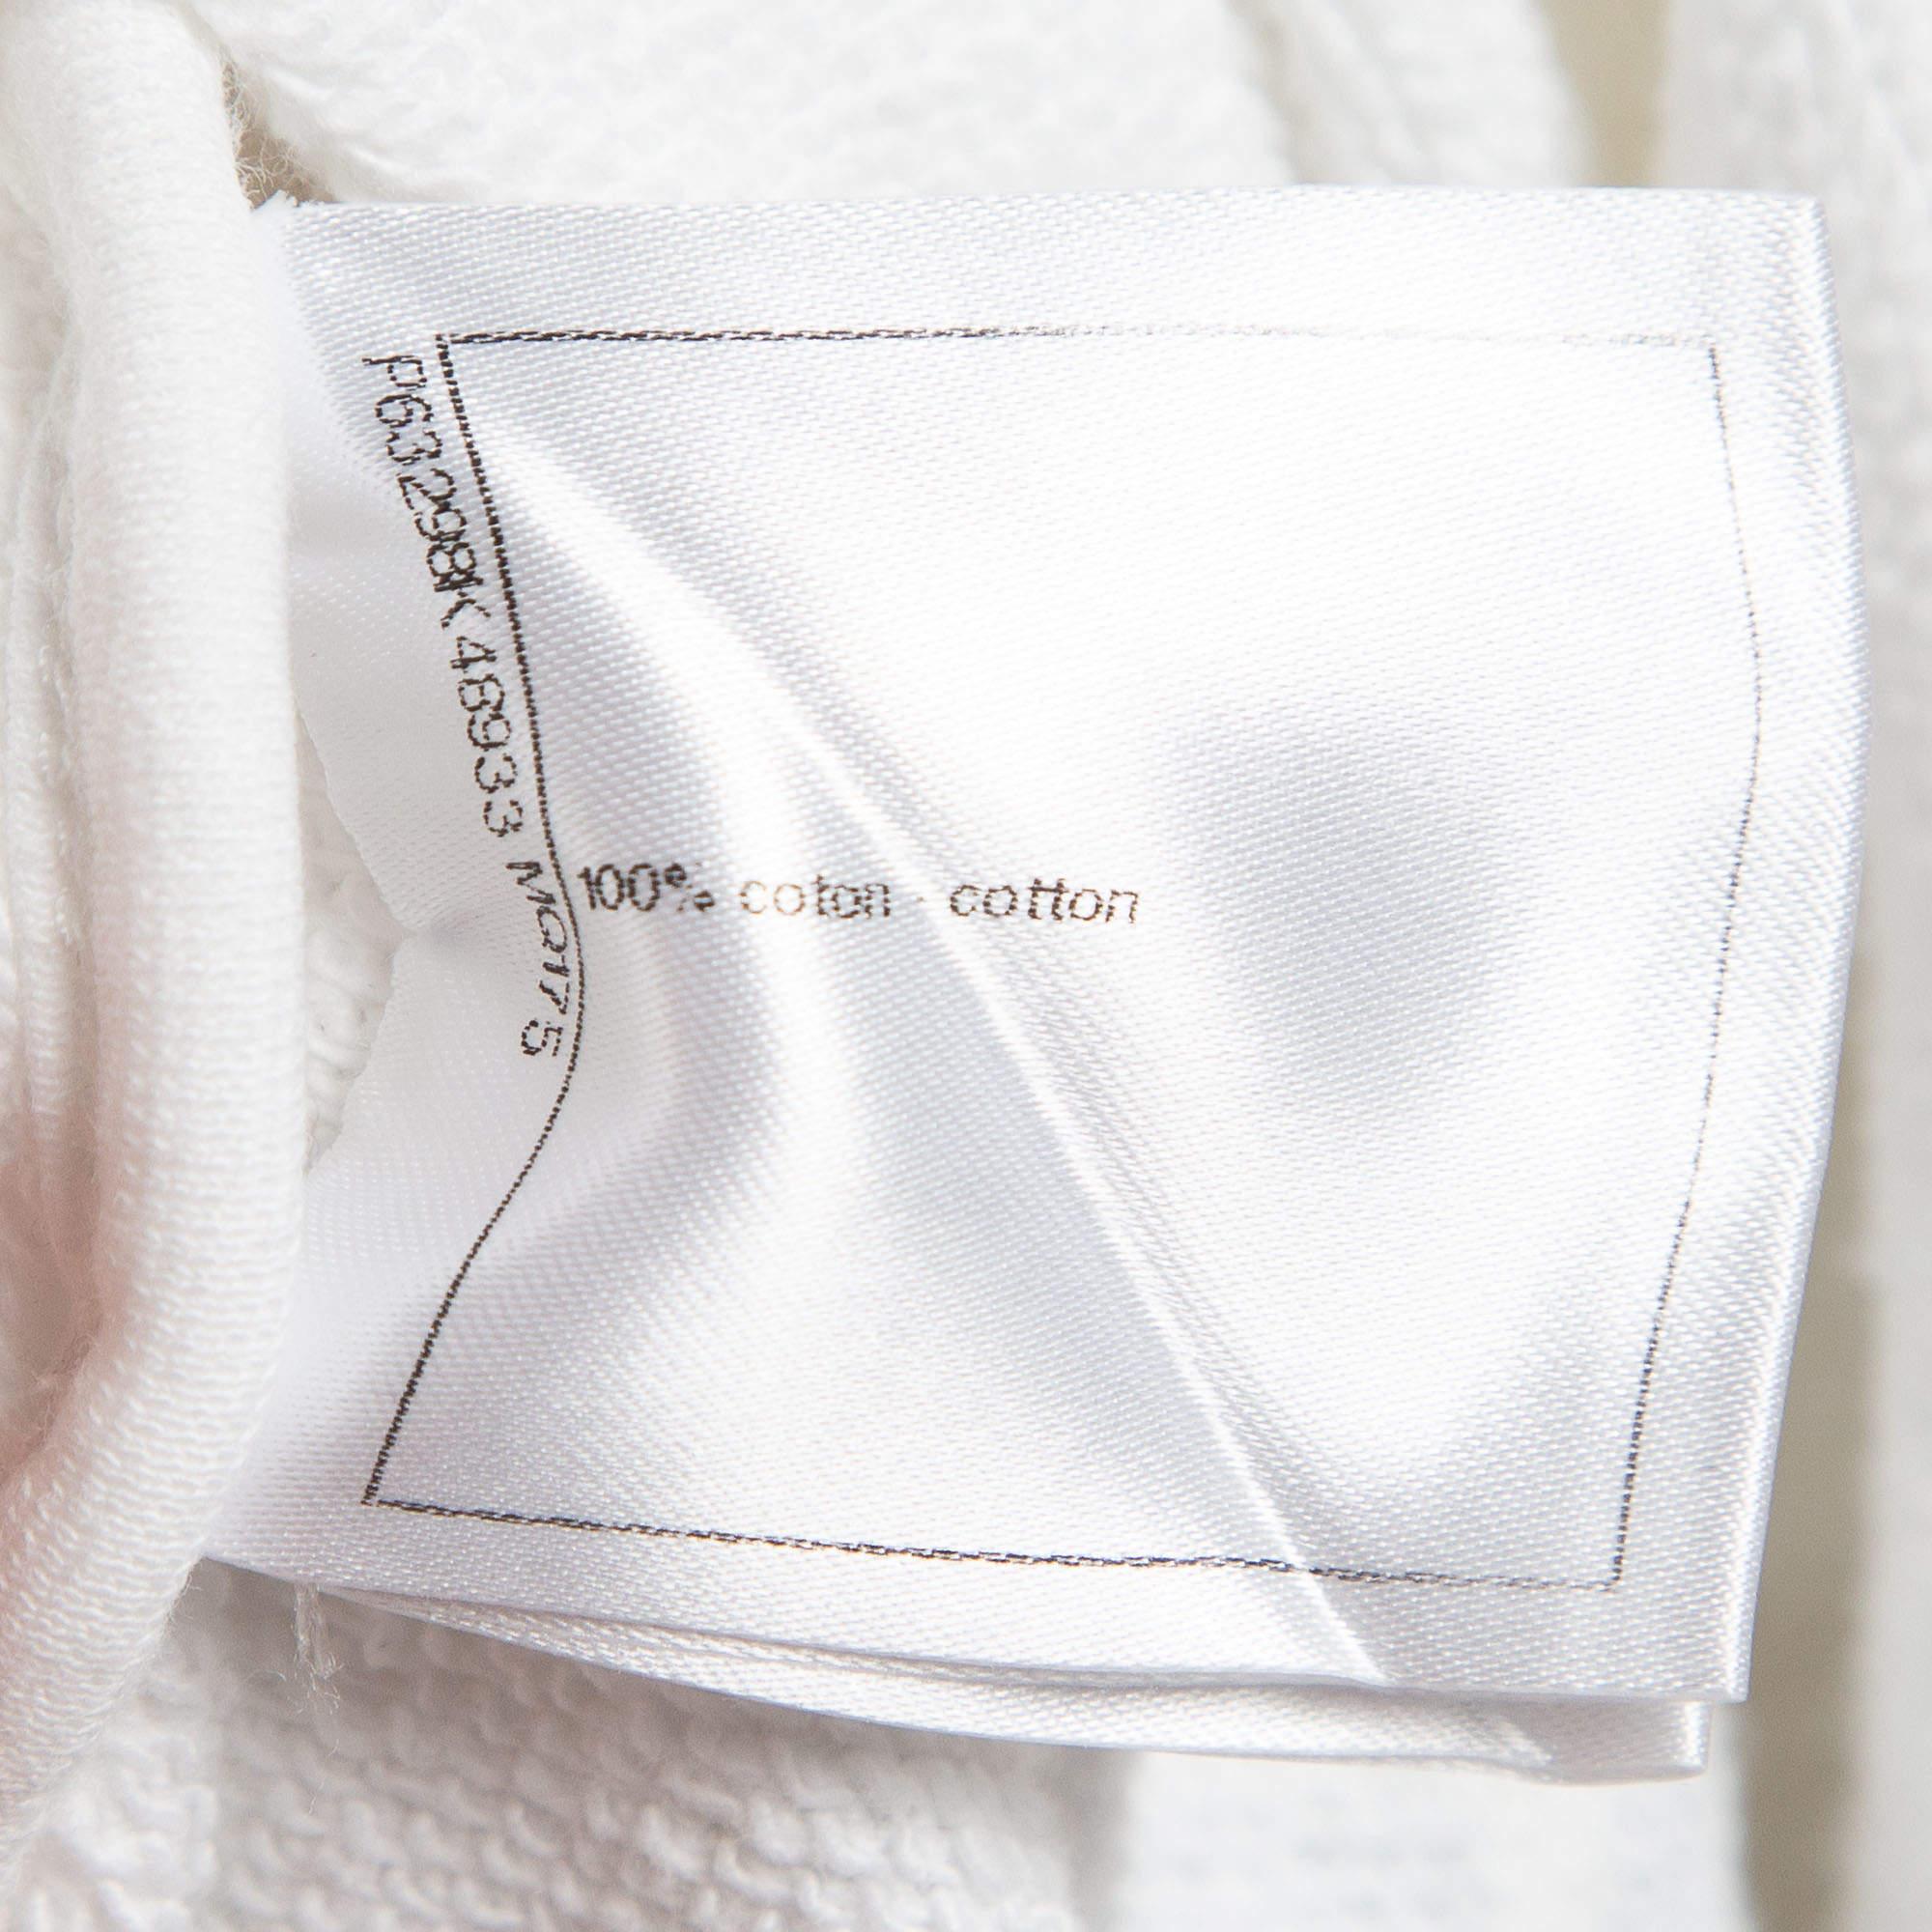  Chanel White Logo Embroidered Cotton Knit Sweatshirt XS 1